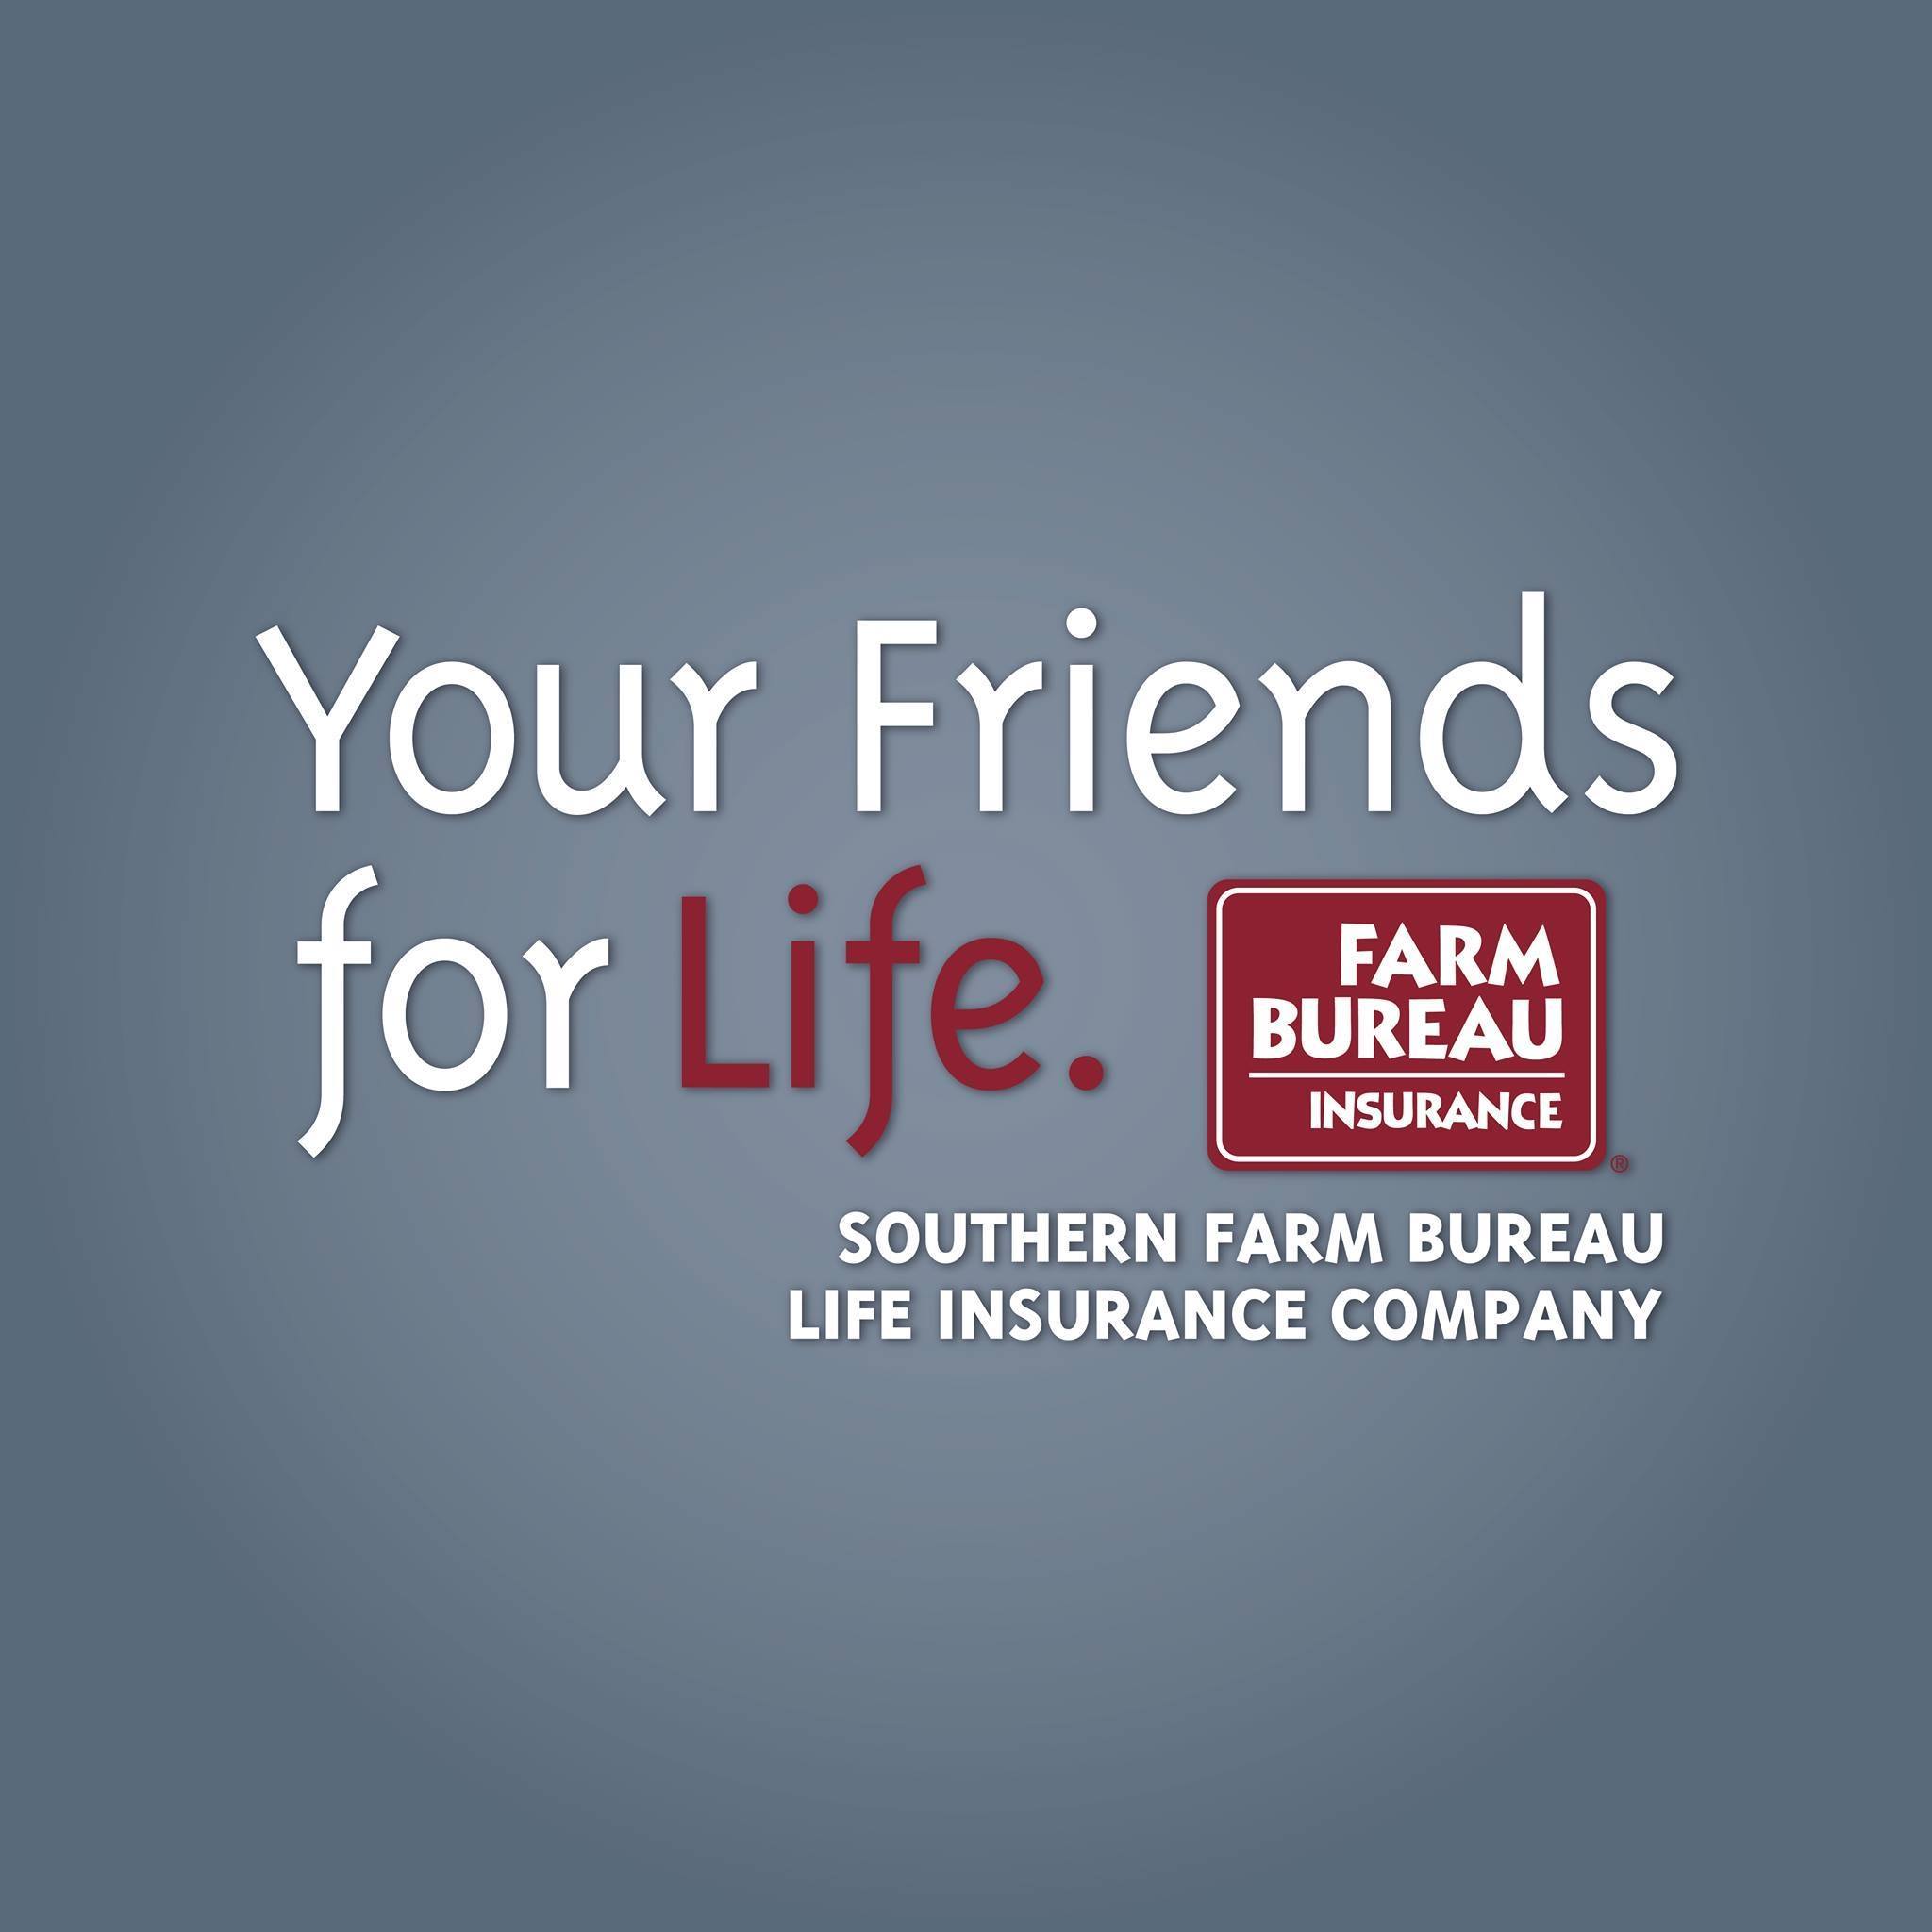 Southern Farm Bureau Life Insurance